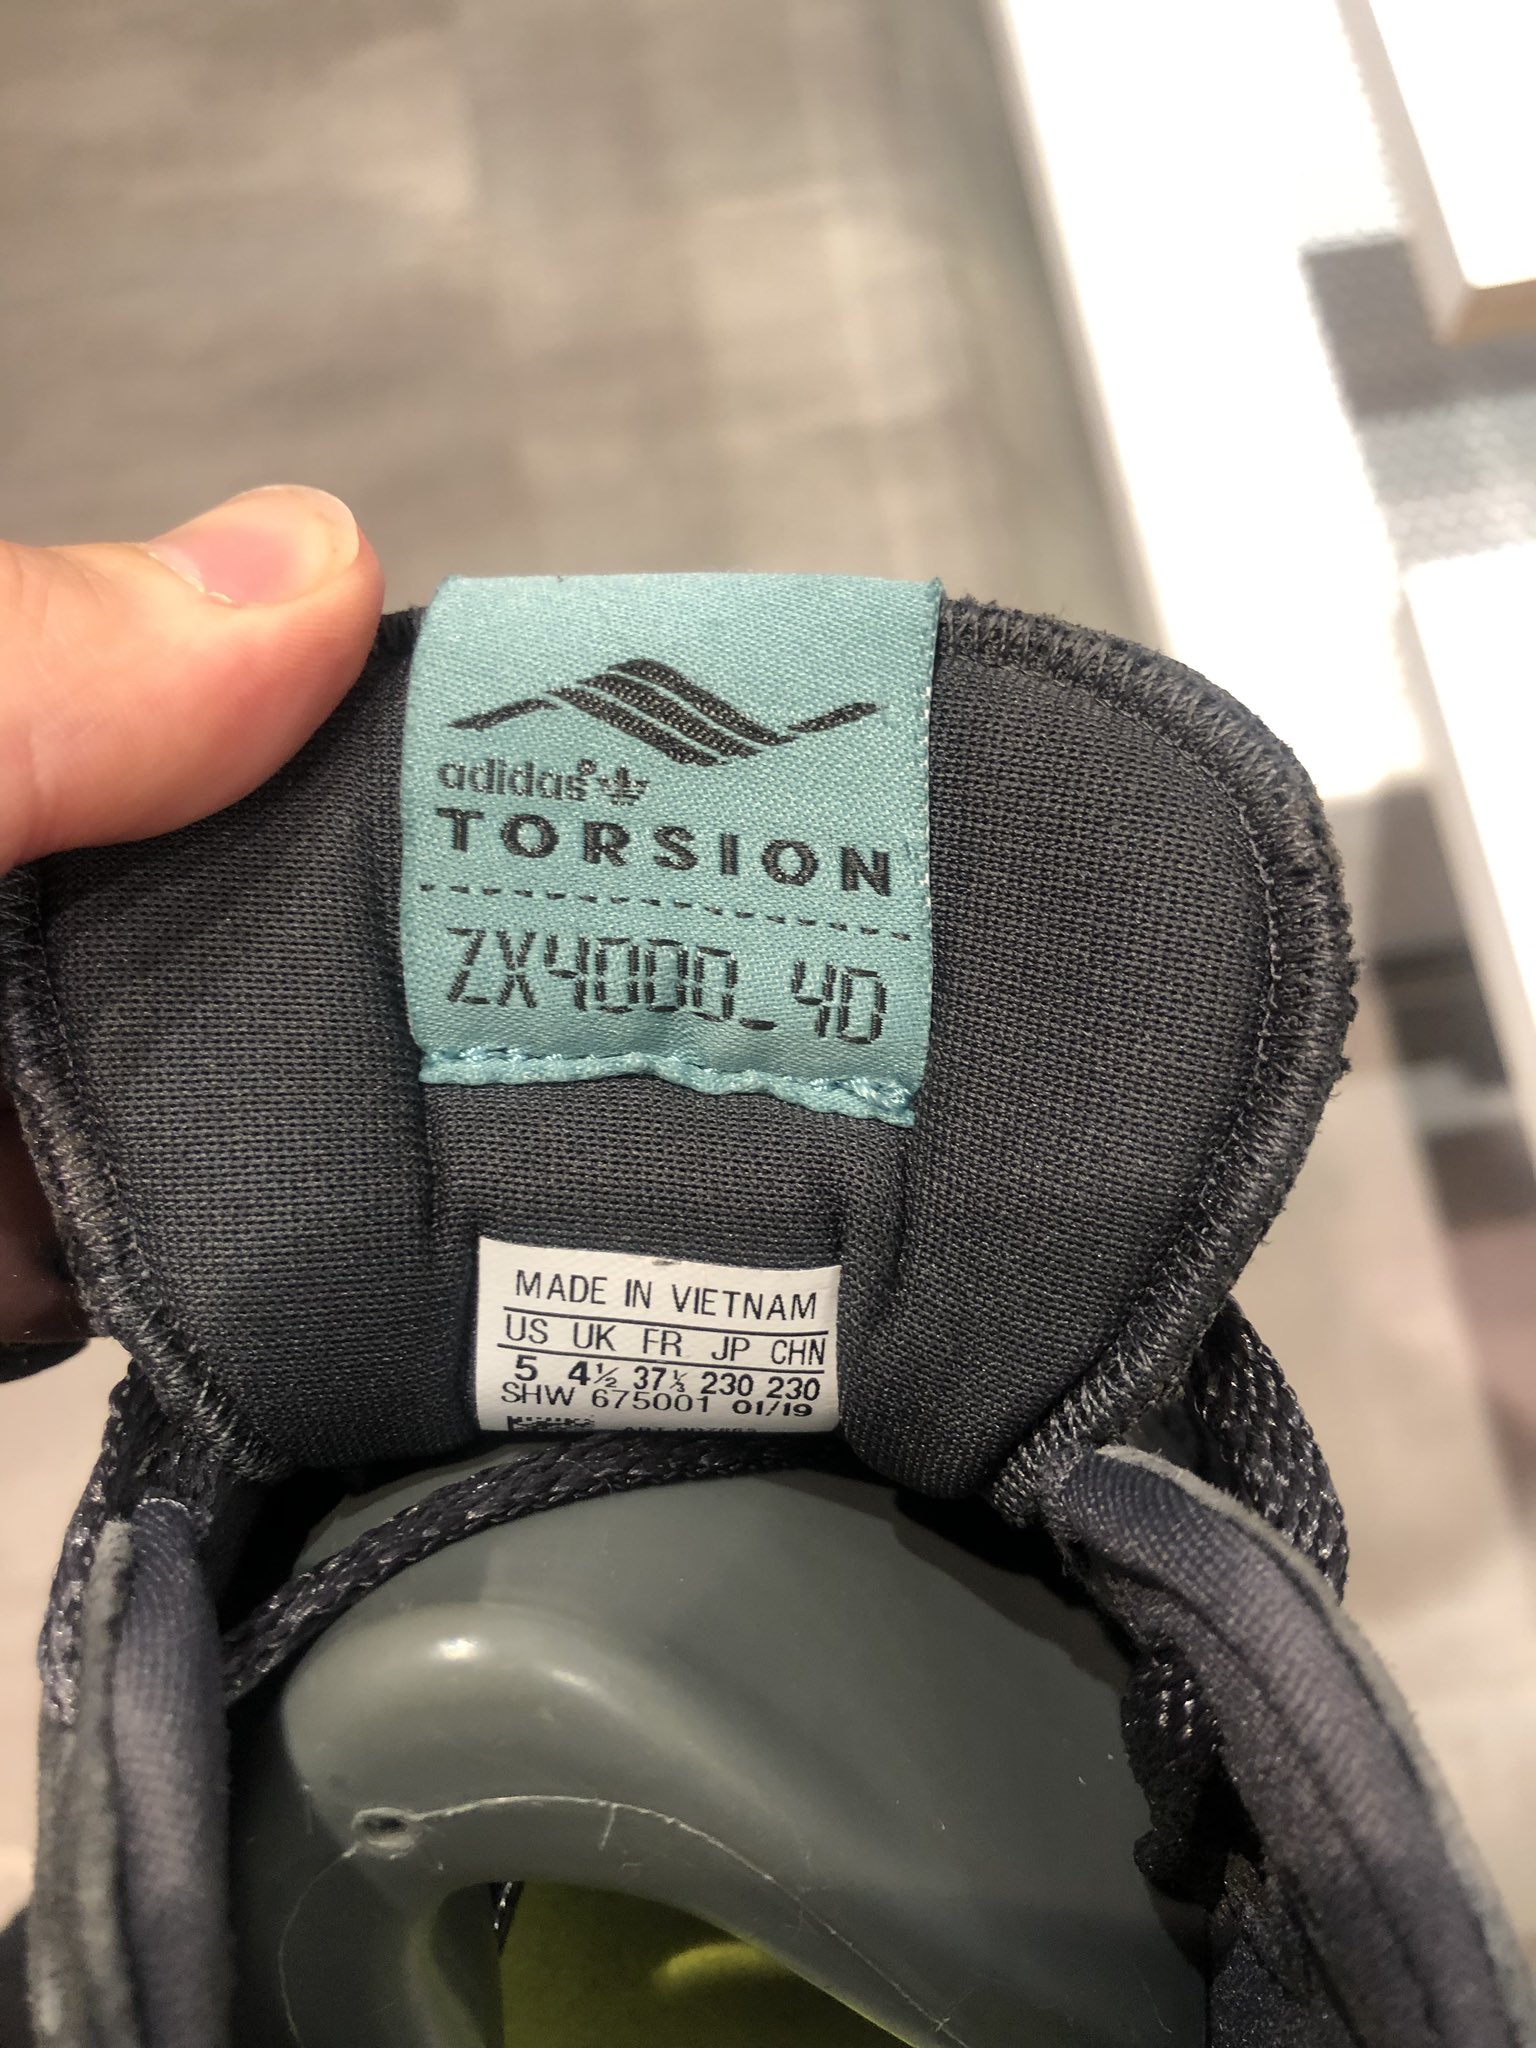 adidas torsion made in vietnam